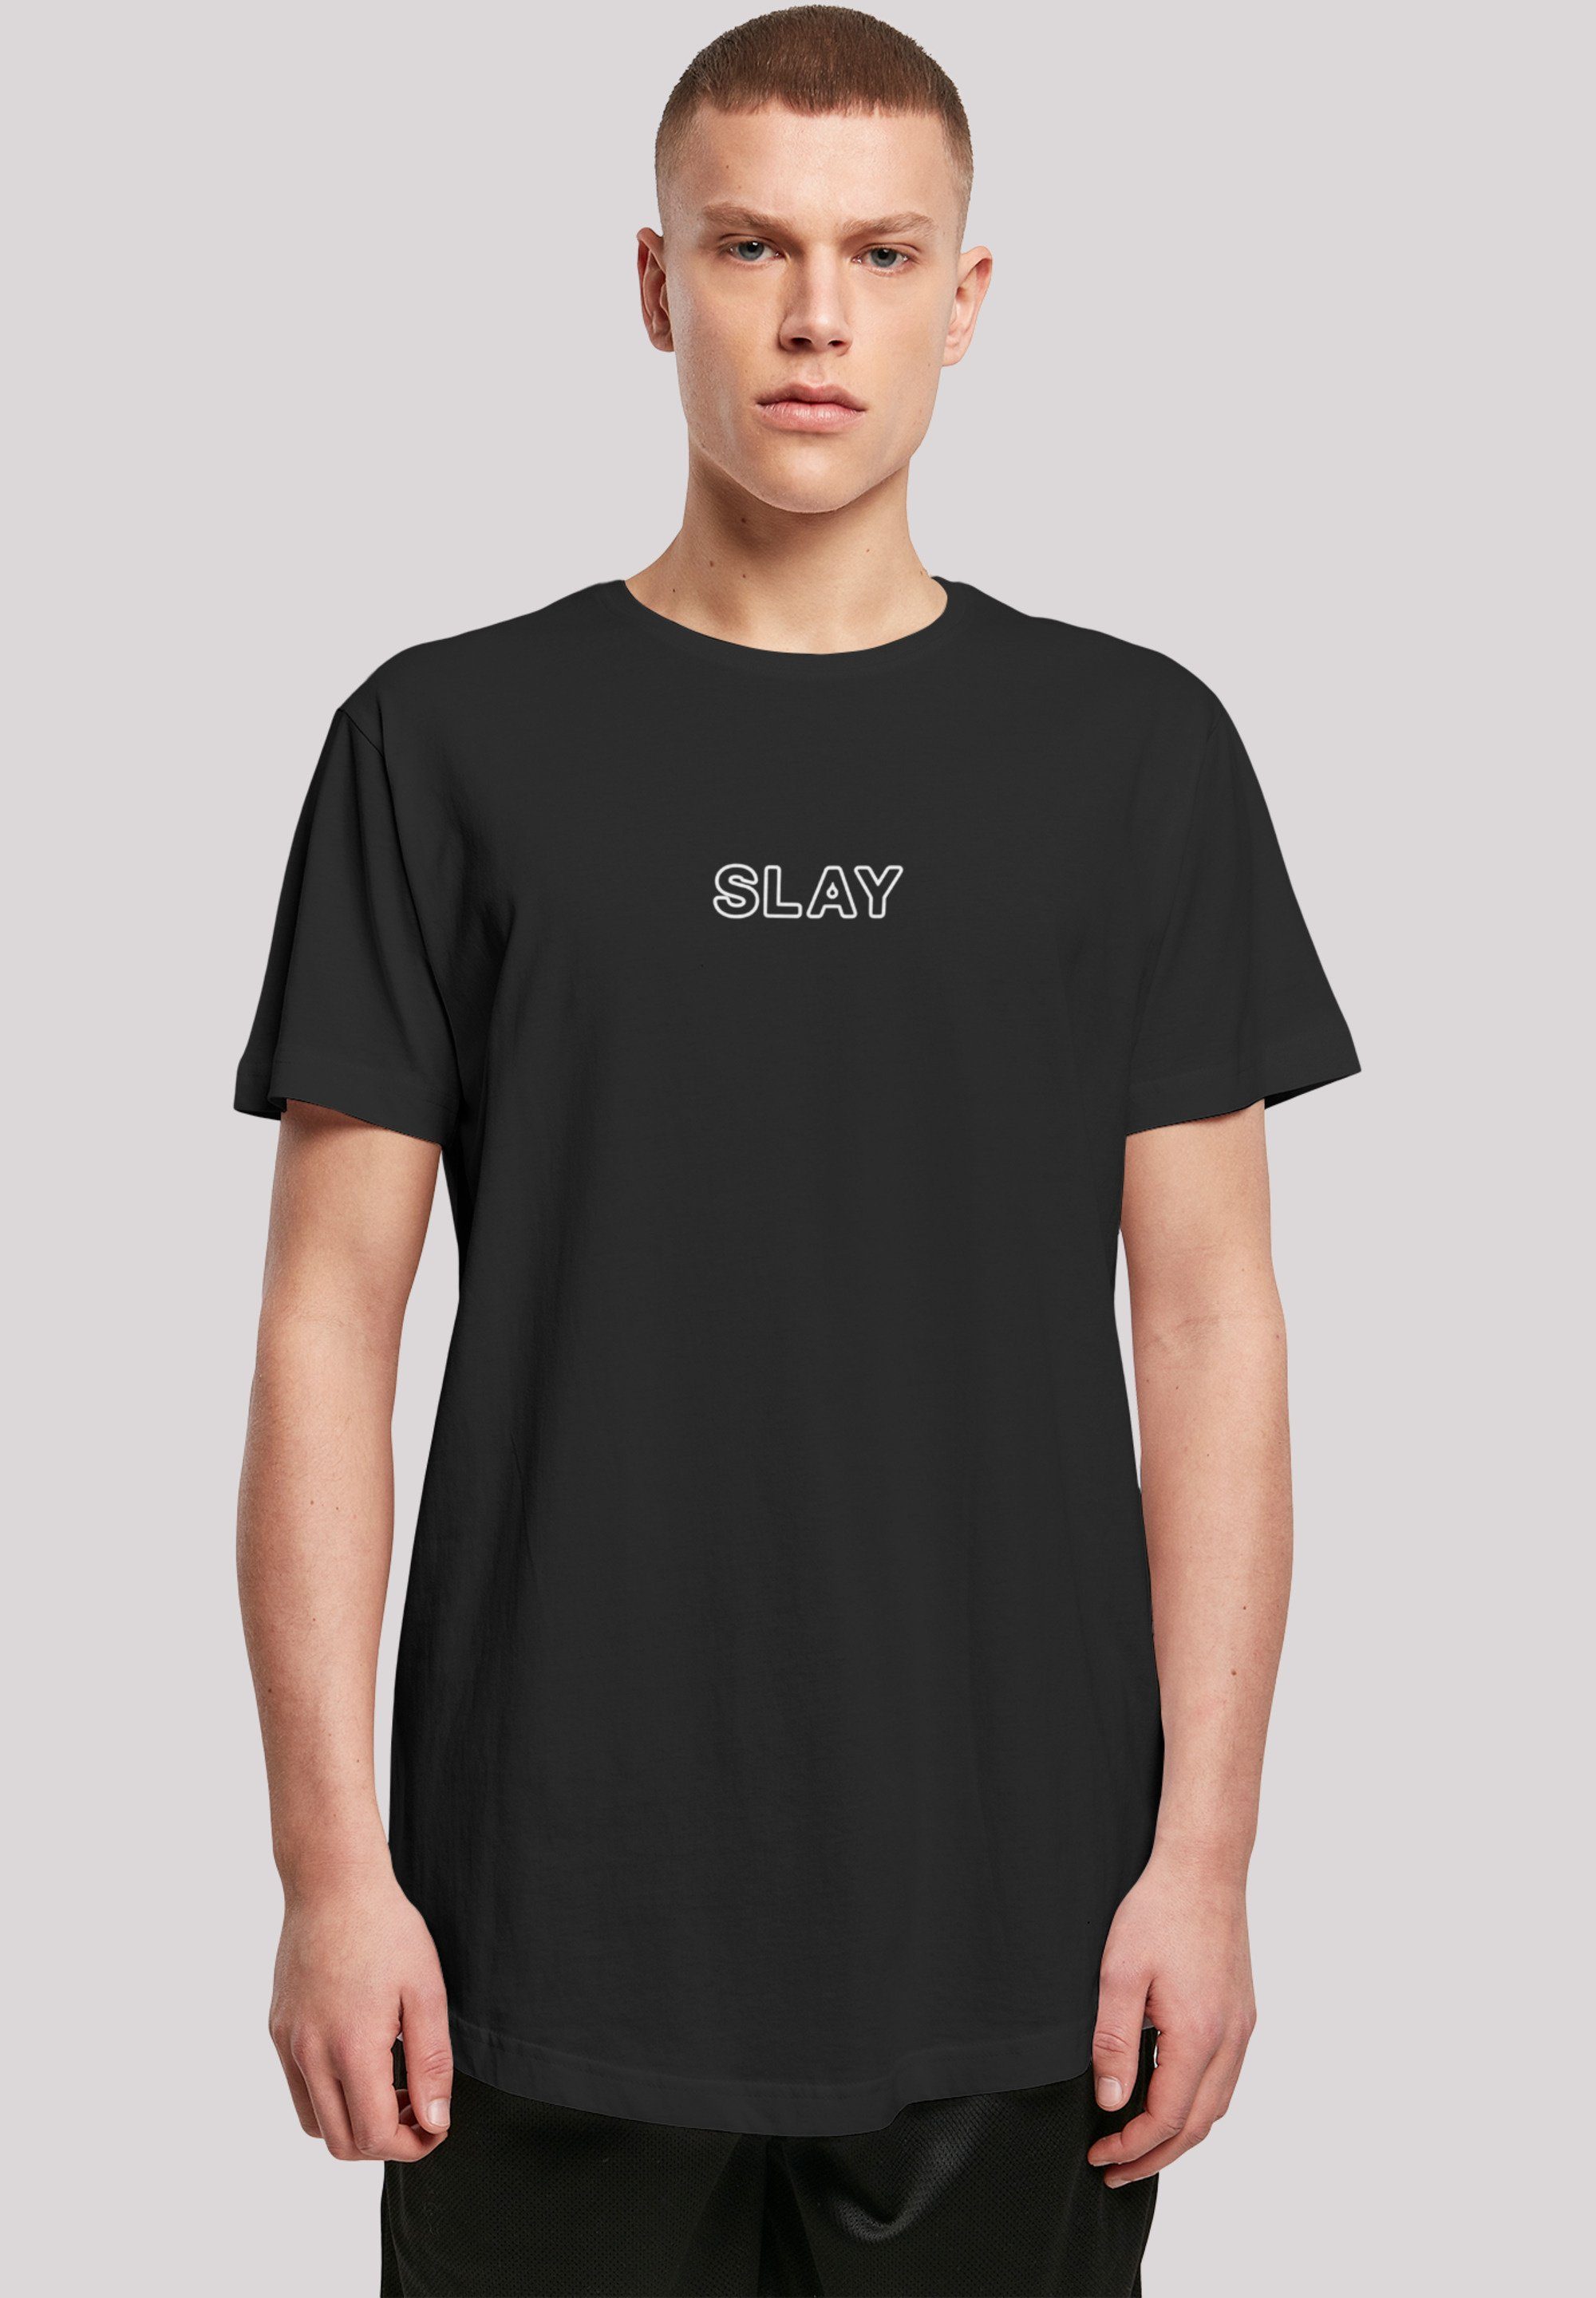 F4NT4STIC T-Shirt Slay Jugendwort 2022, slang, lang geschnitten